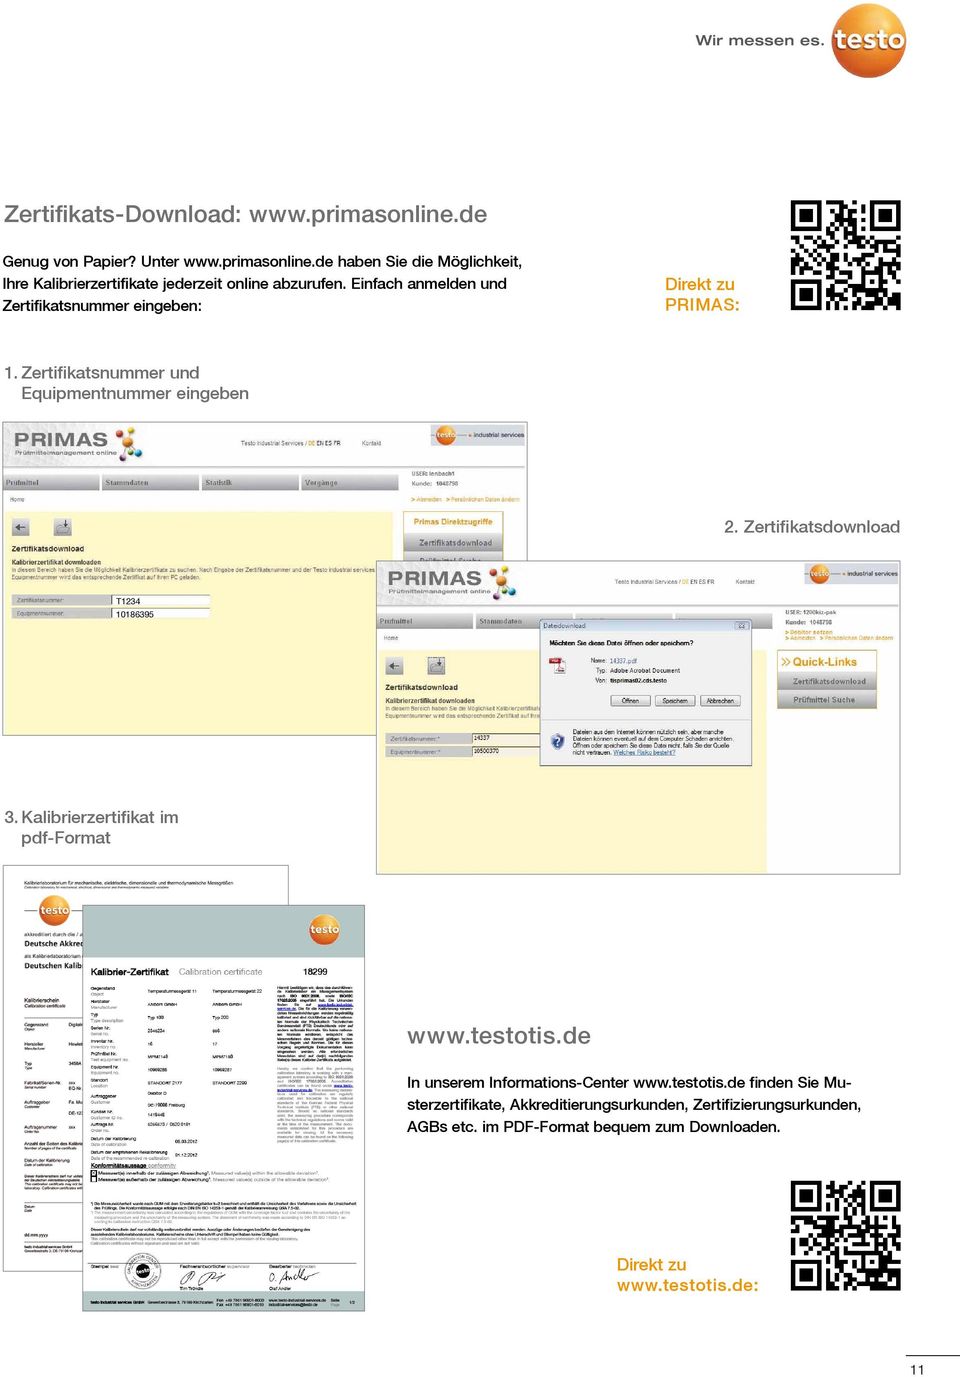 Zertifikatsdownload T1234 10186395 3. Kalibrierzertifikat im pdf-format www.testotis.